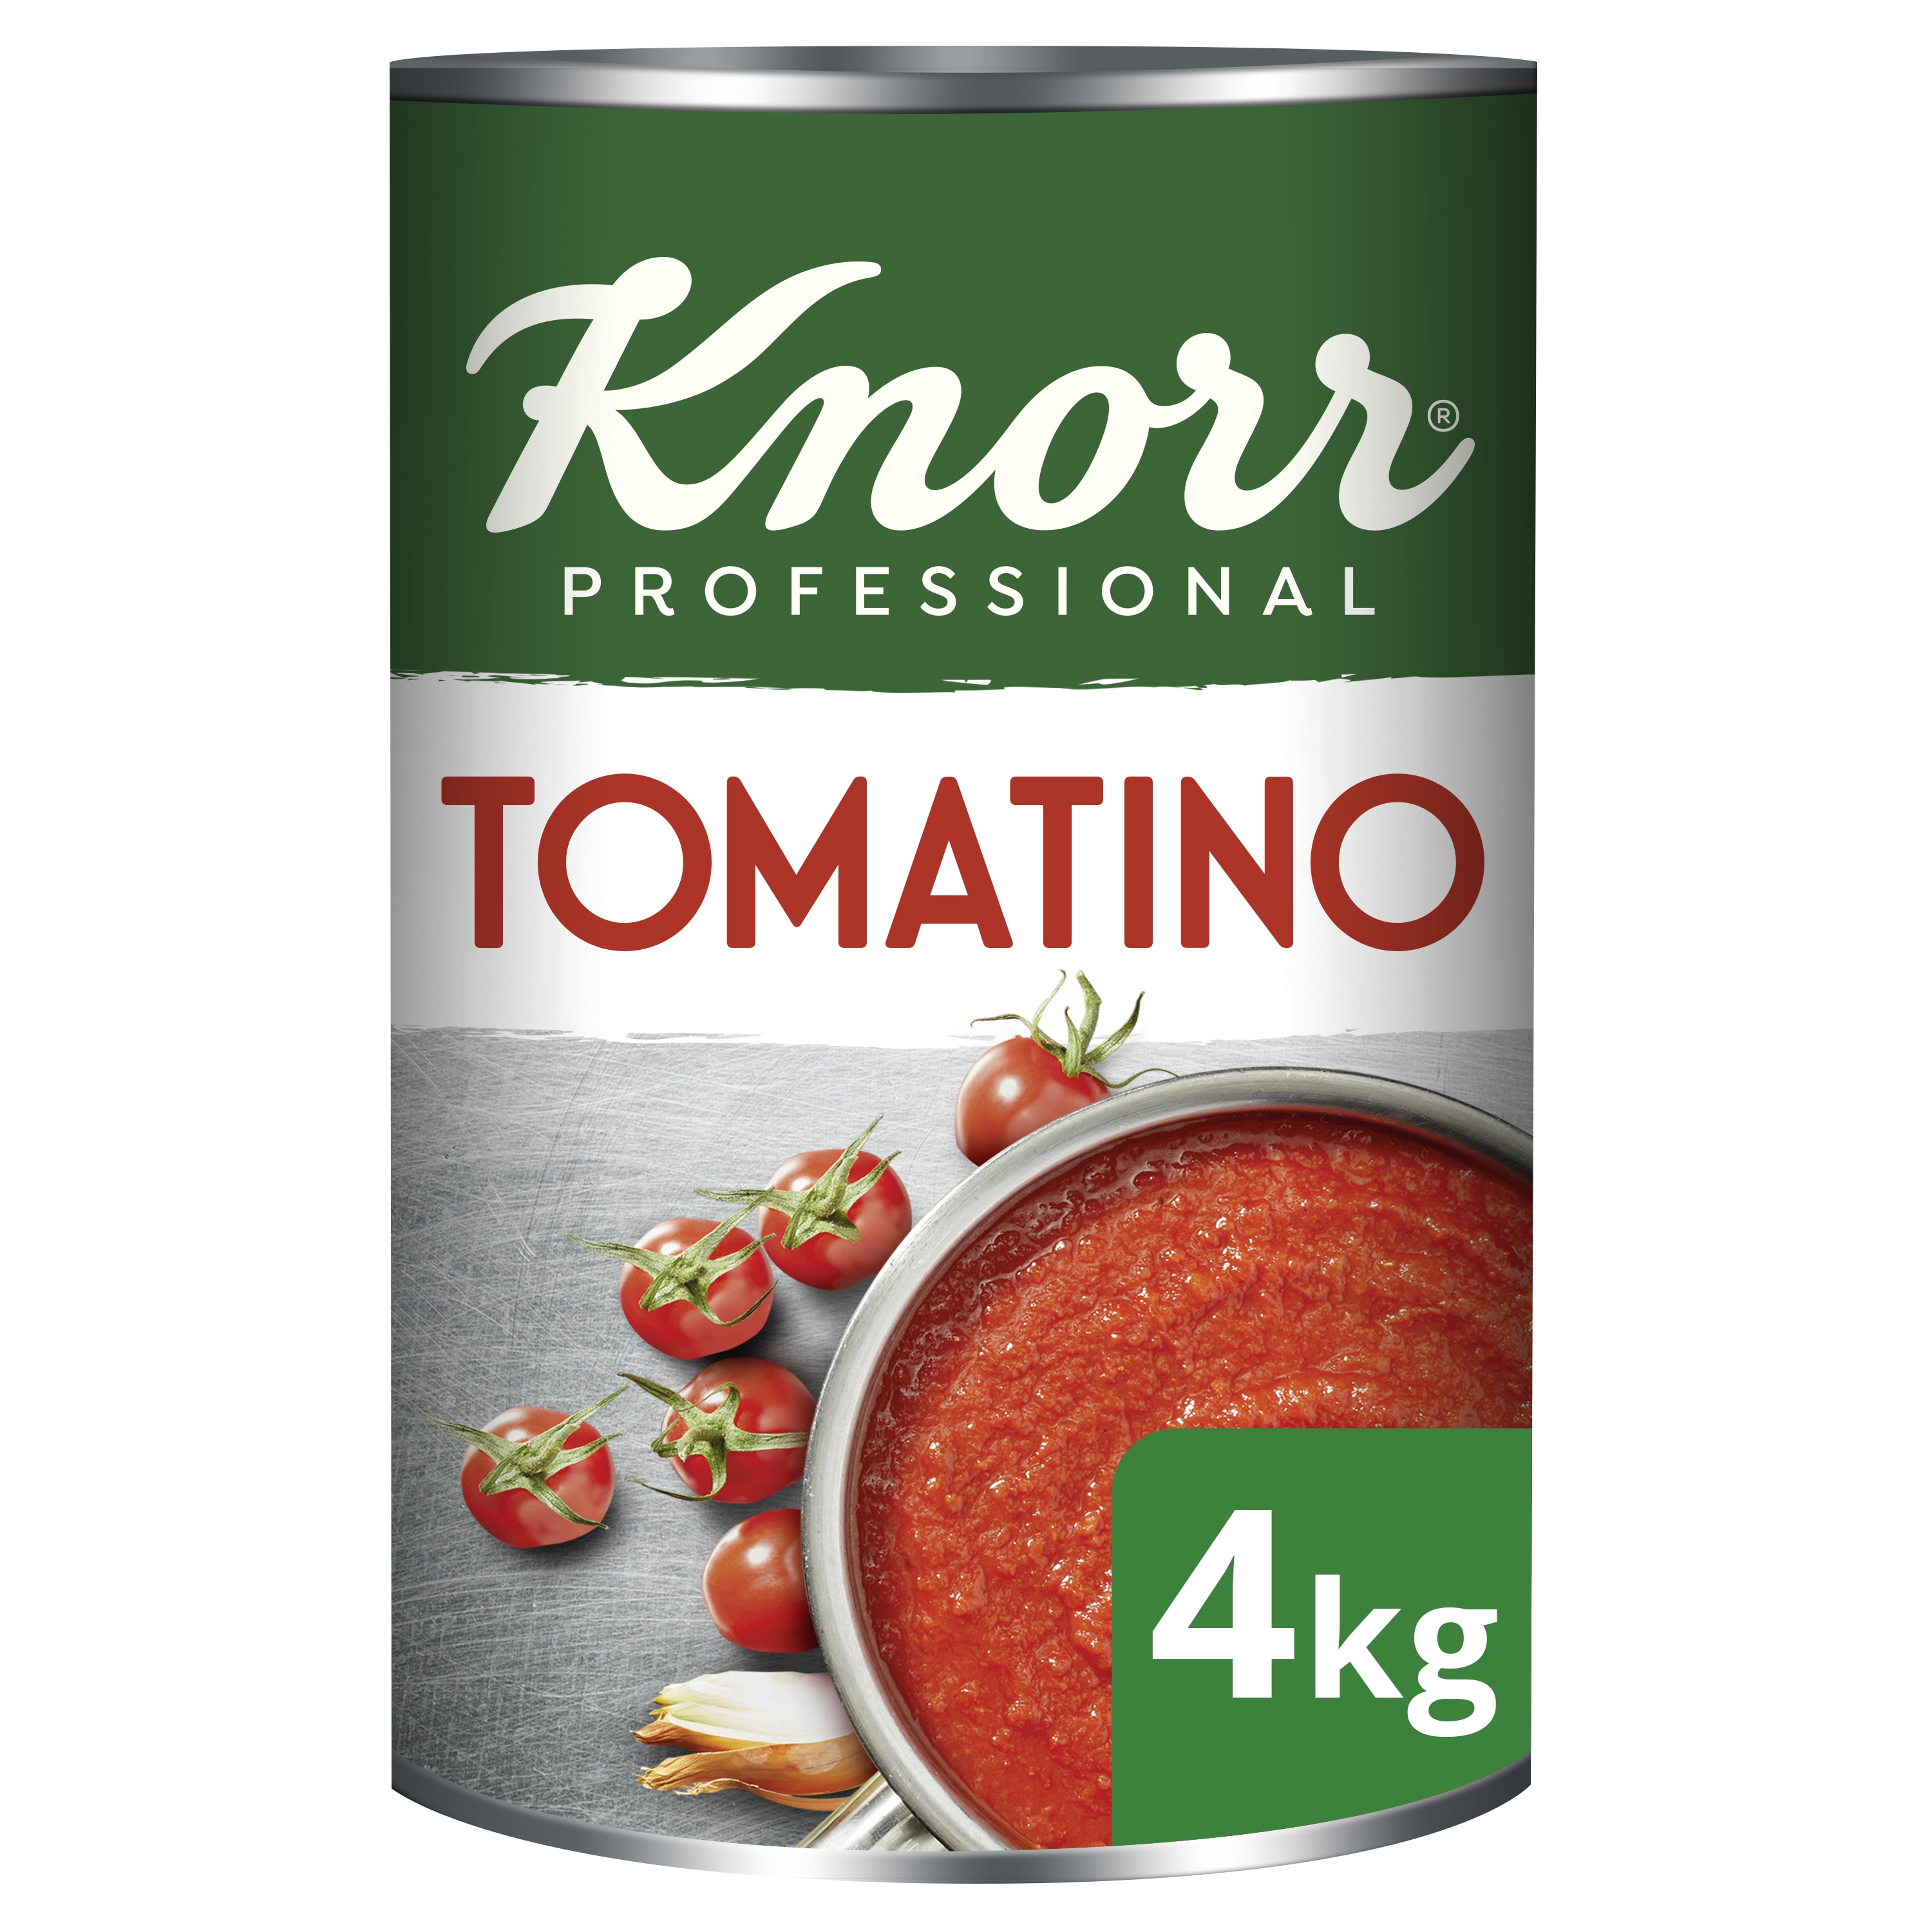 Knorr Professional Italiana Tomatino 4kg - 